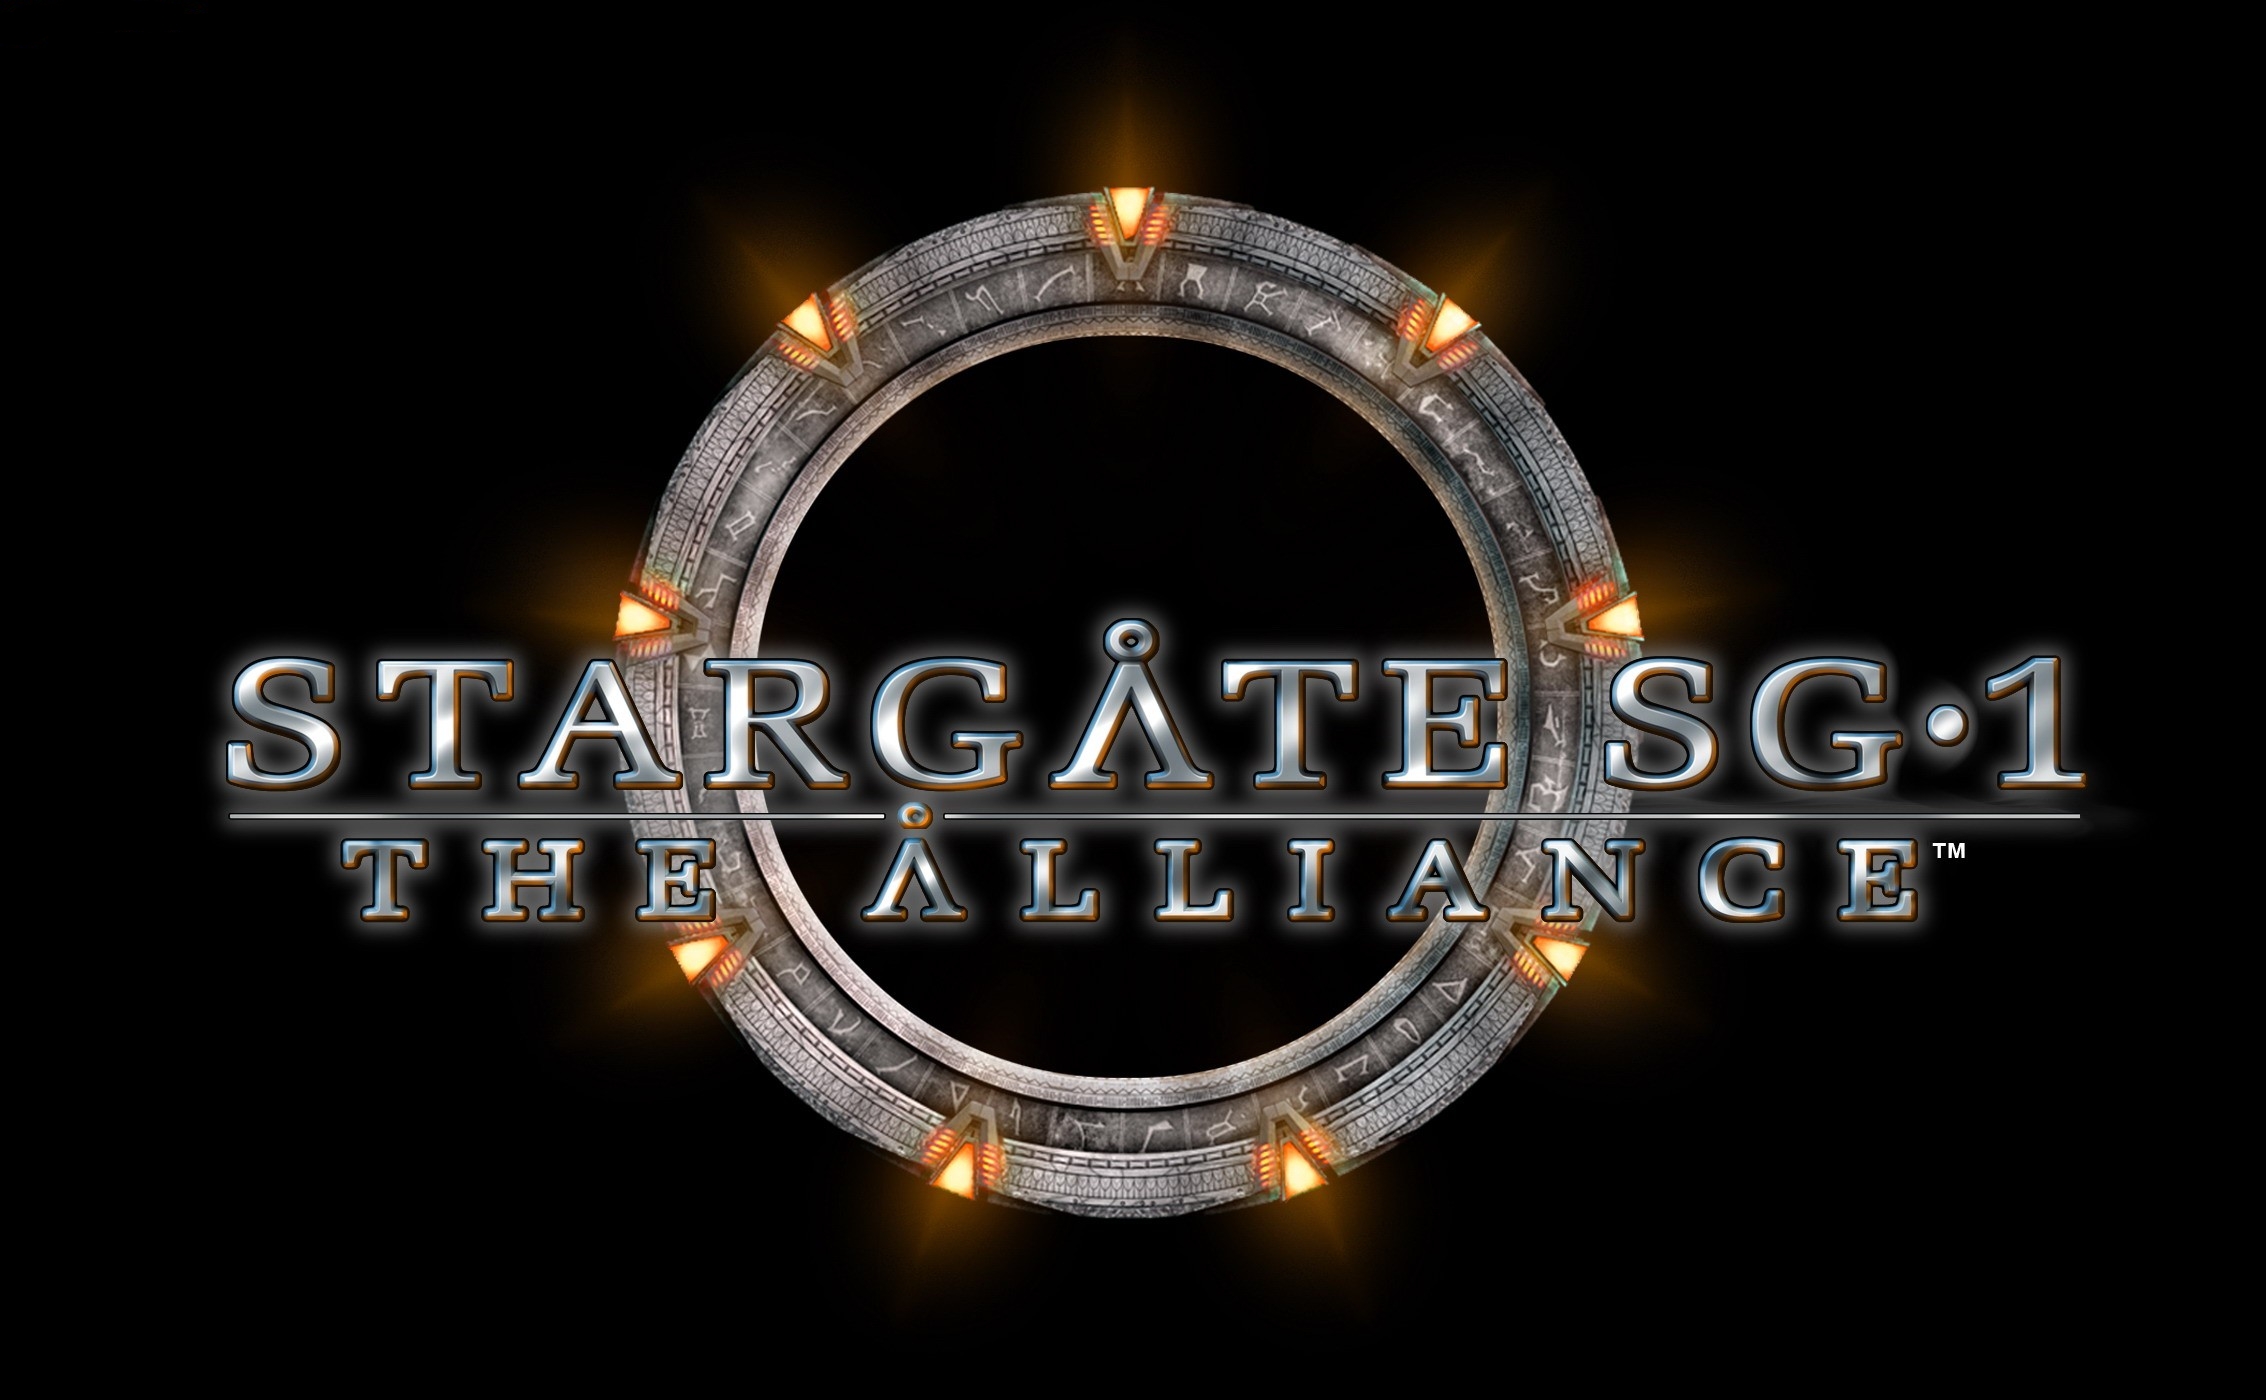 Stargate SG-1 - обои на рабочий стол